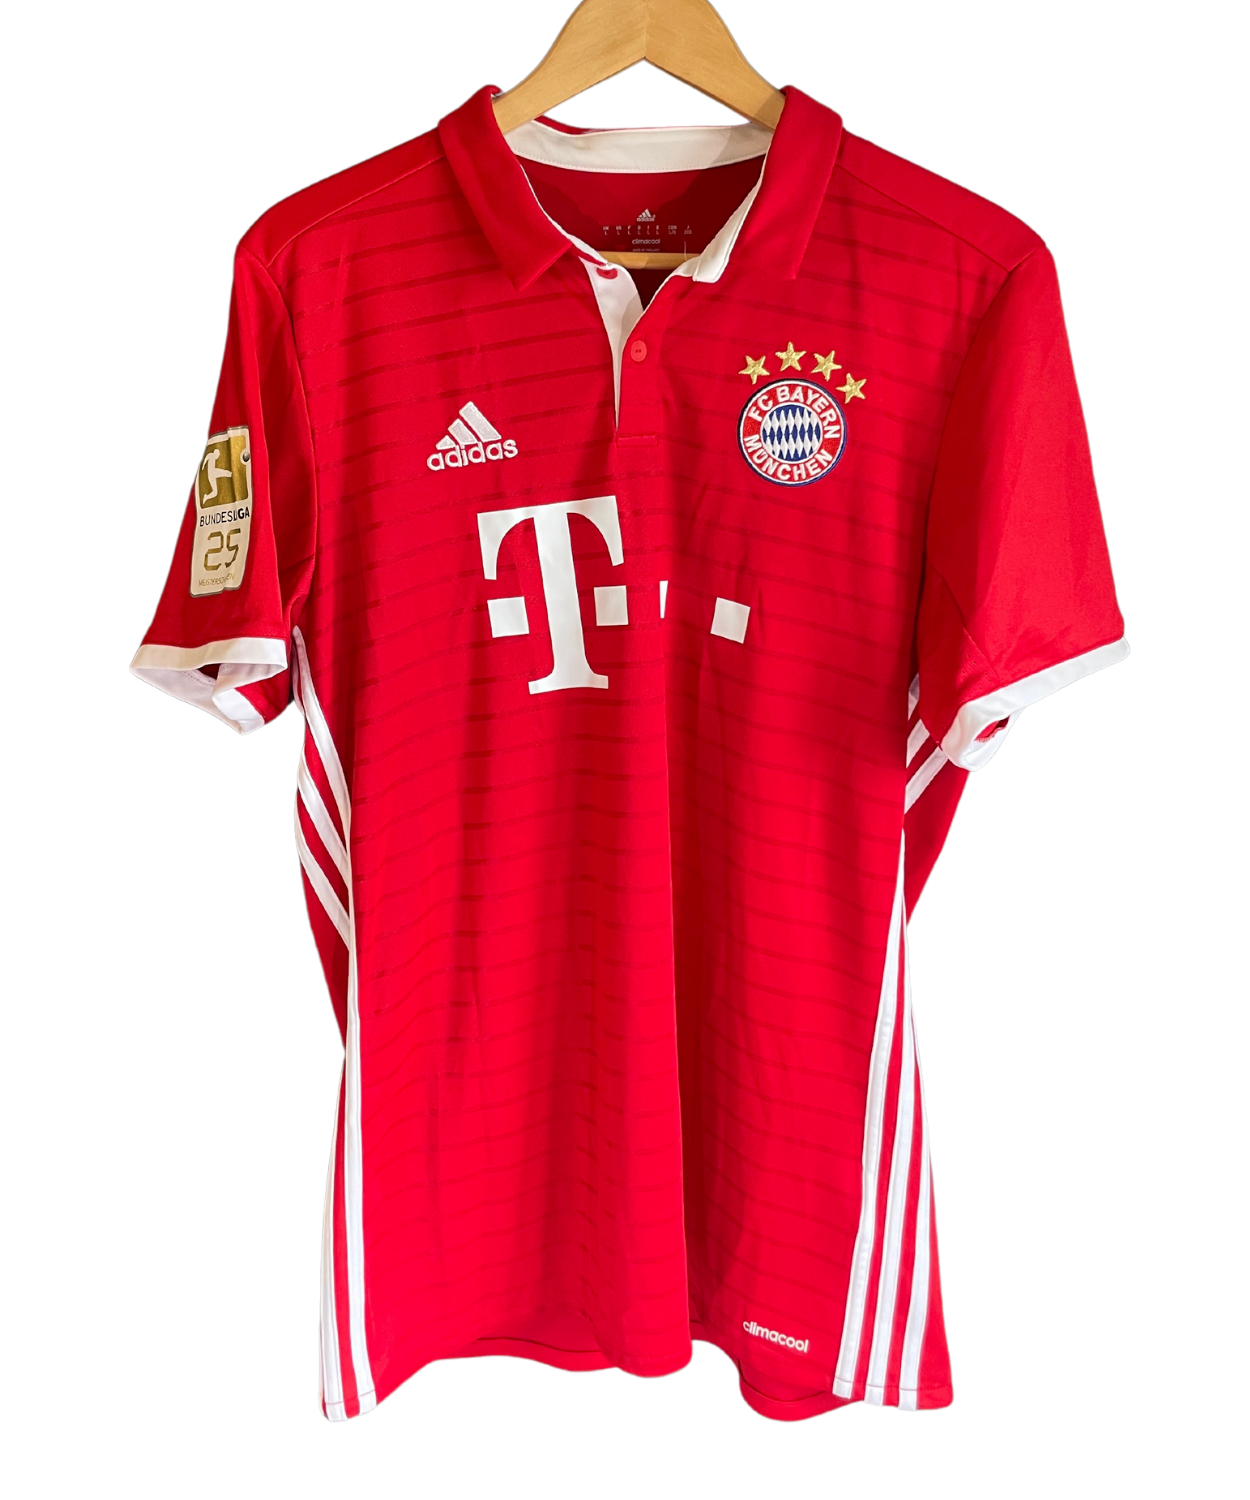 Bayern München 2016/17 Müller Home Kit (L)